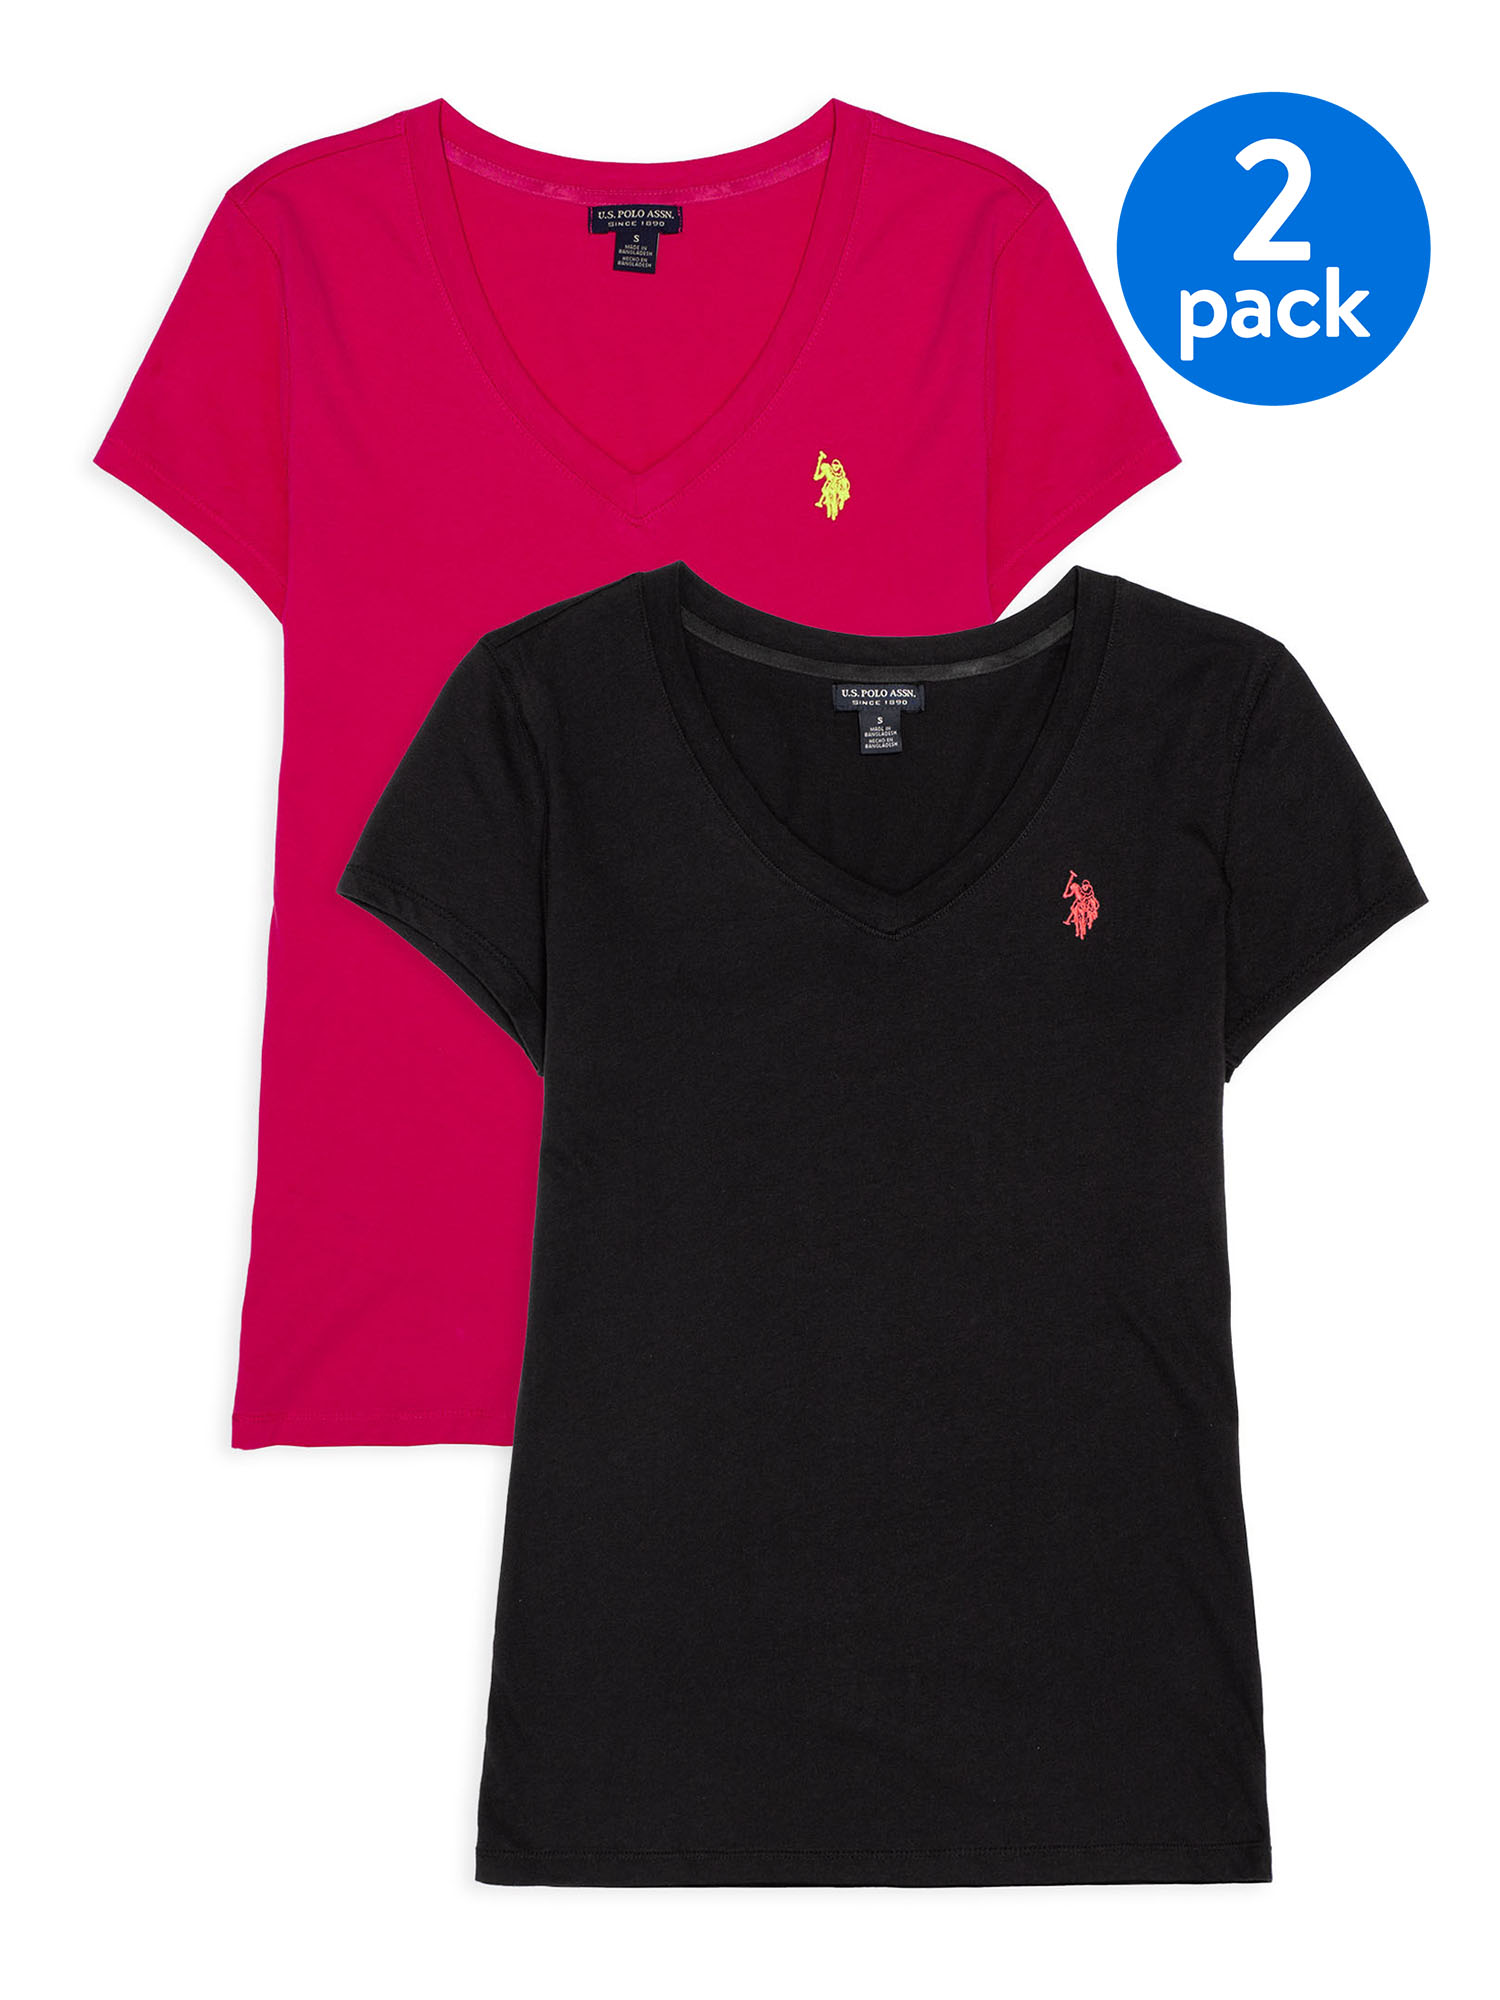 U.S. Polo Assn. V-Neck T-Shirt 2pc Pack Women's - image 1 of 8